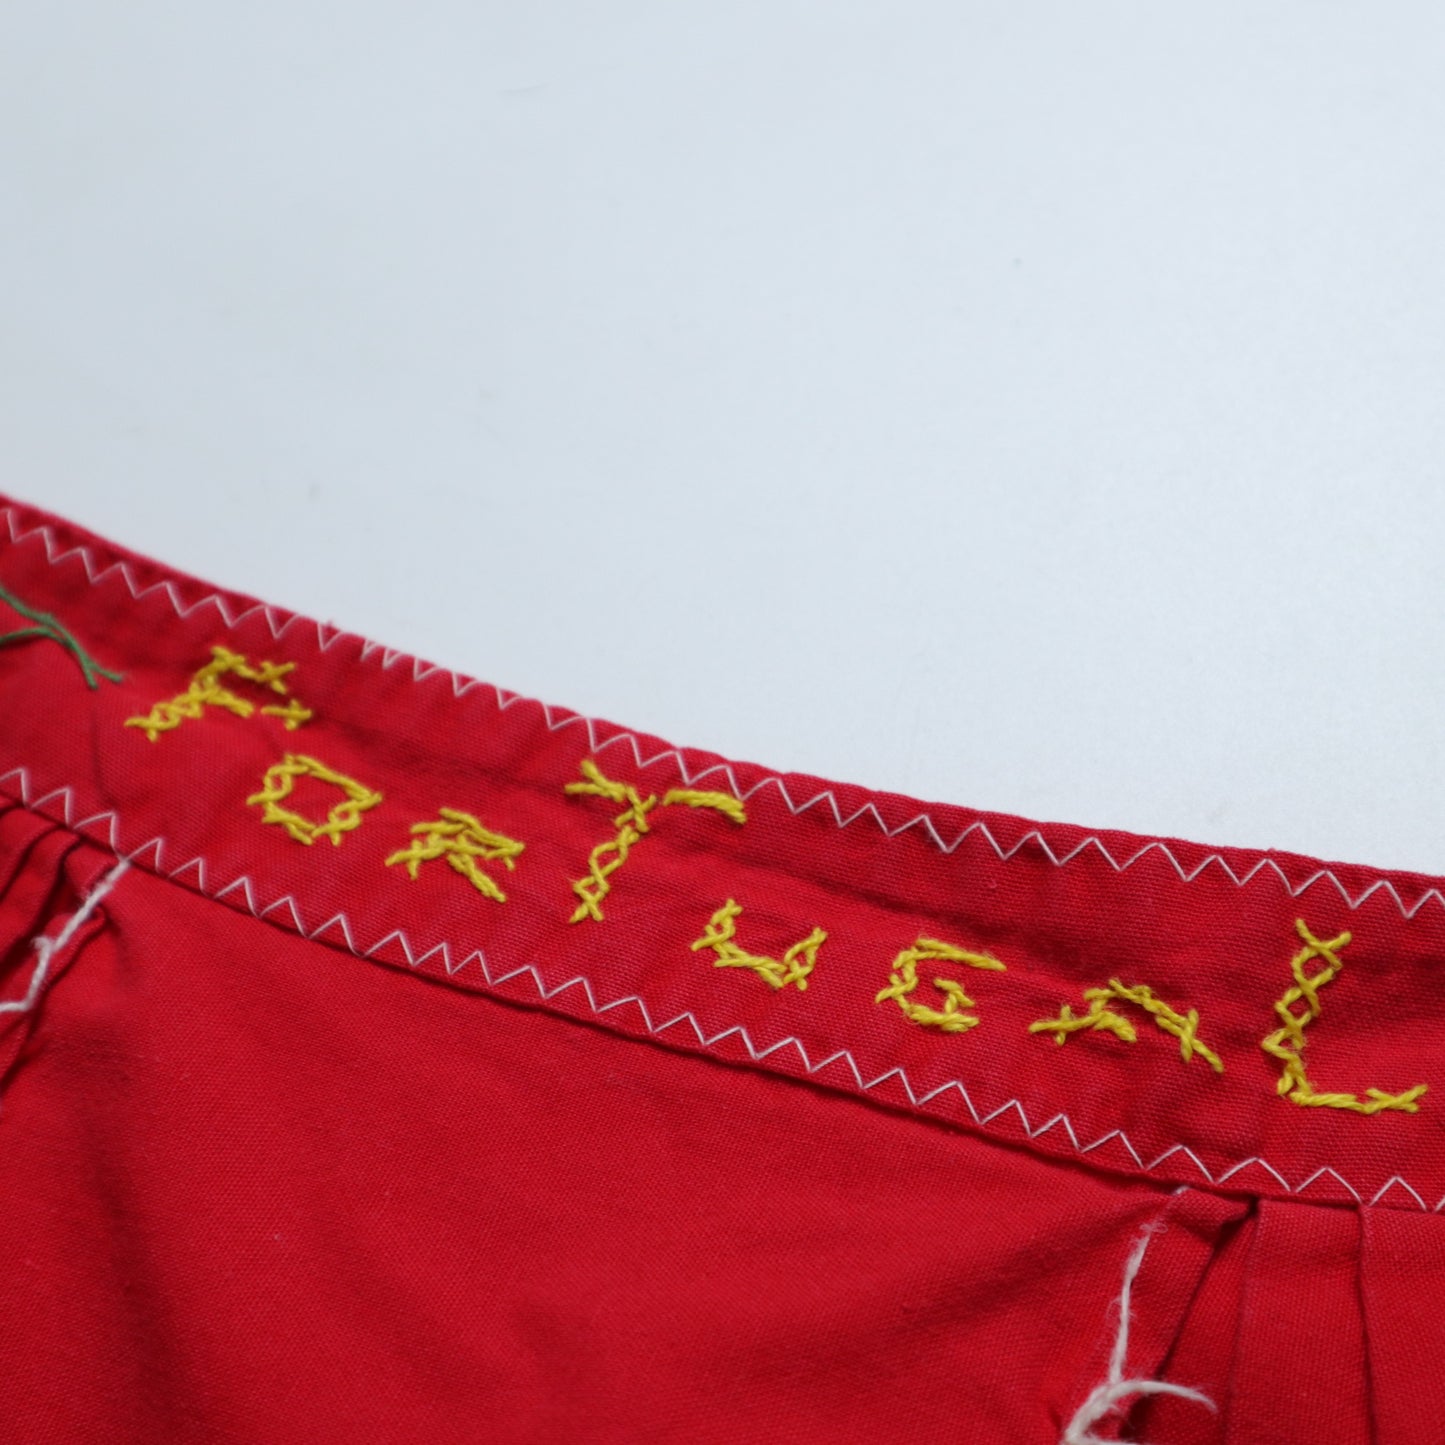 Handmade Apron Red Bottom Portuguese Hand Embroidered Apron Half Apron